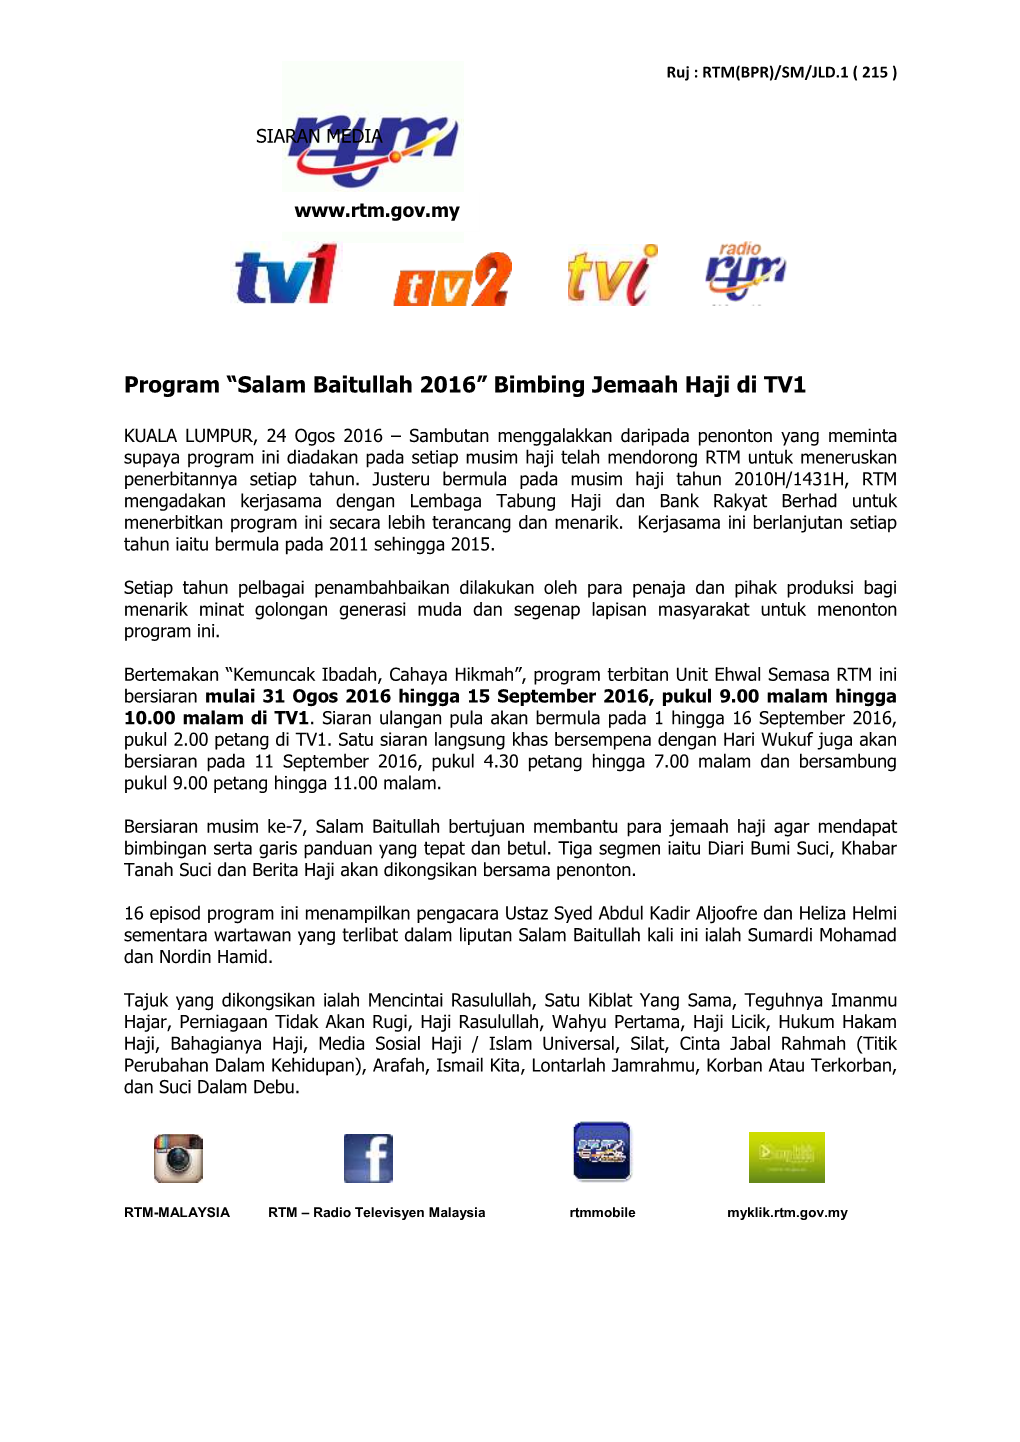 Program “Salam Baitullah 2016” Bimbing Jemaah Haji Di TV1